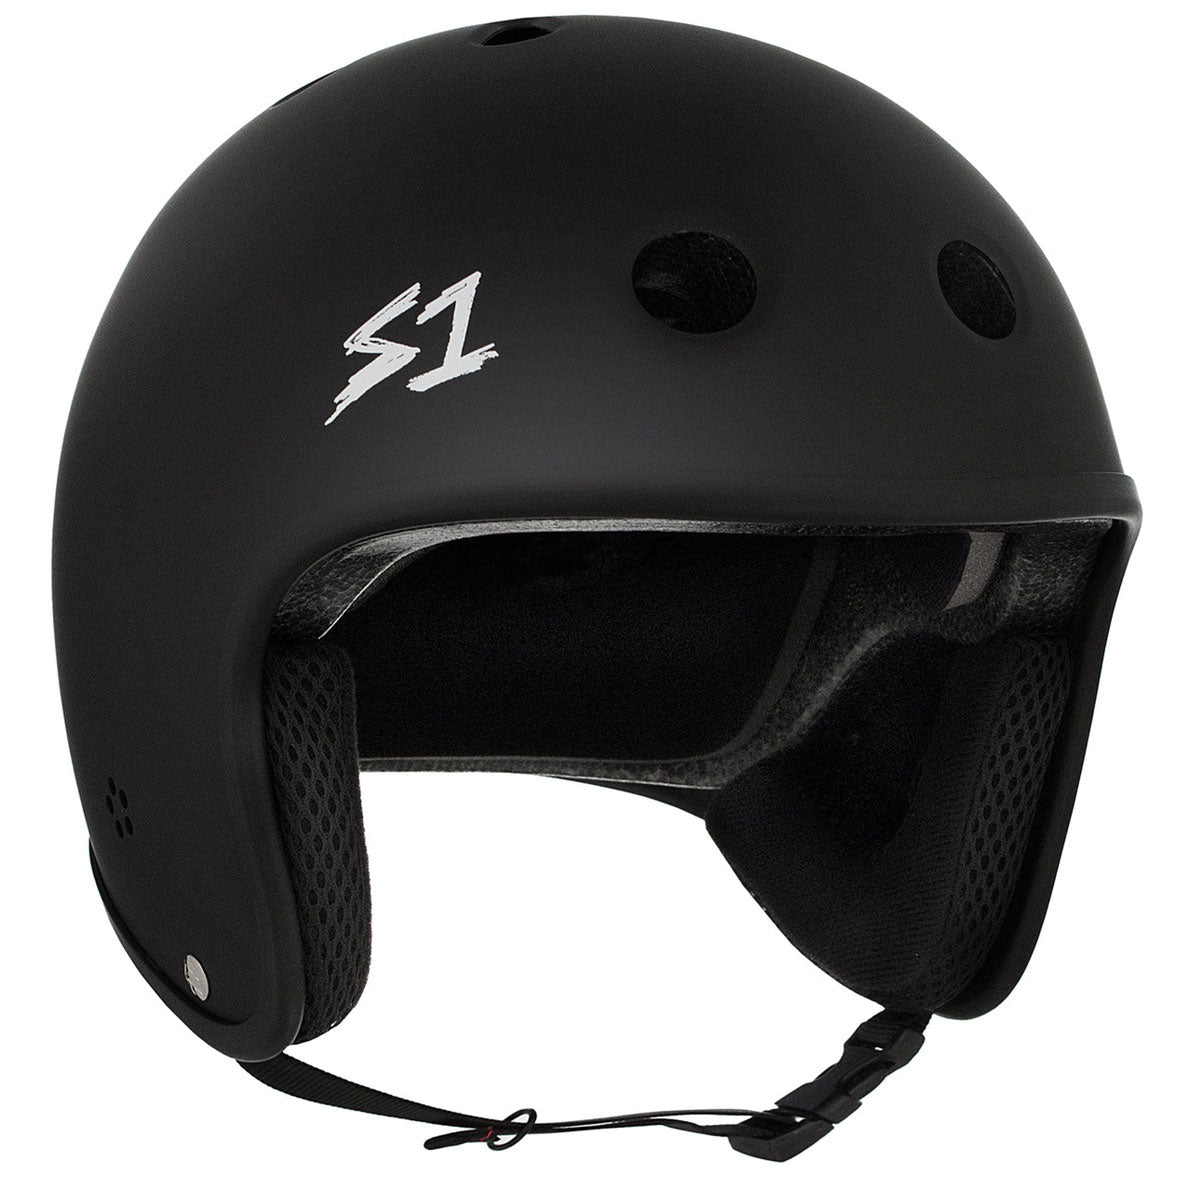 S-One Lifer Retro Helmet - Black Matte image 1